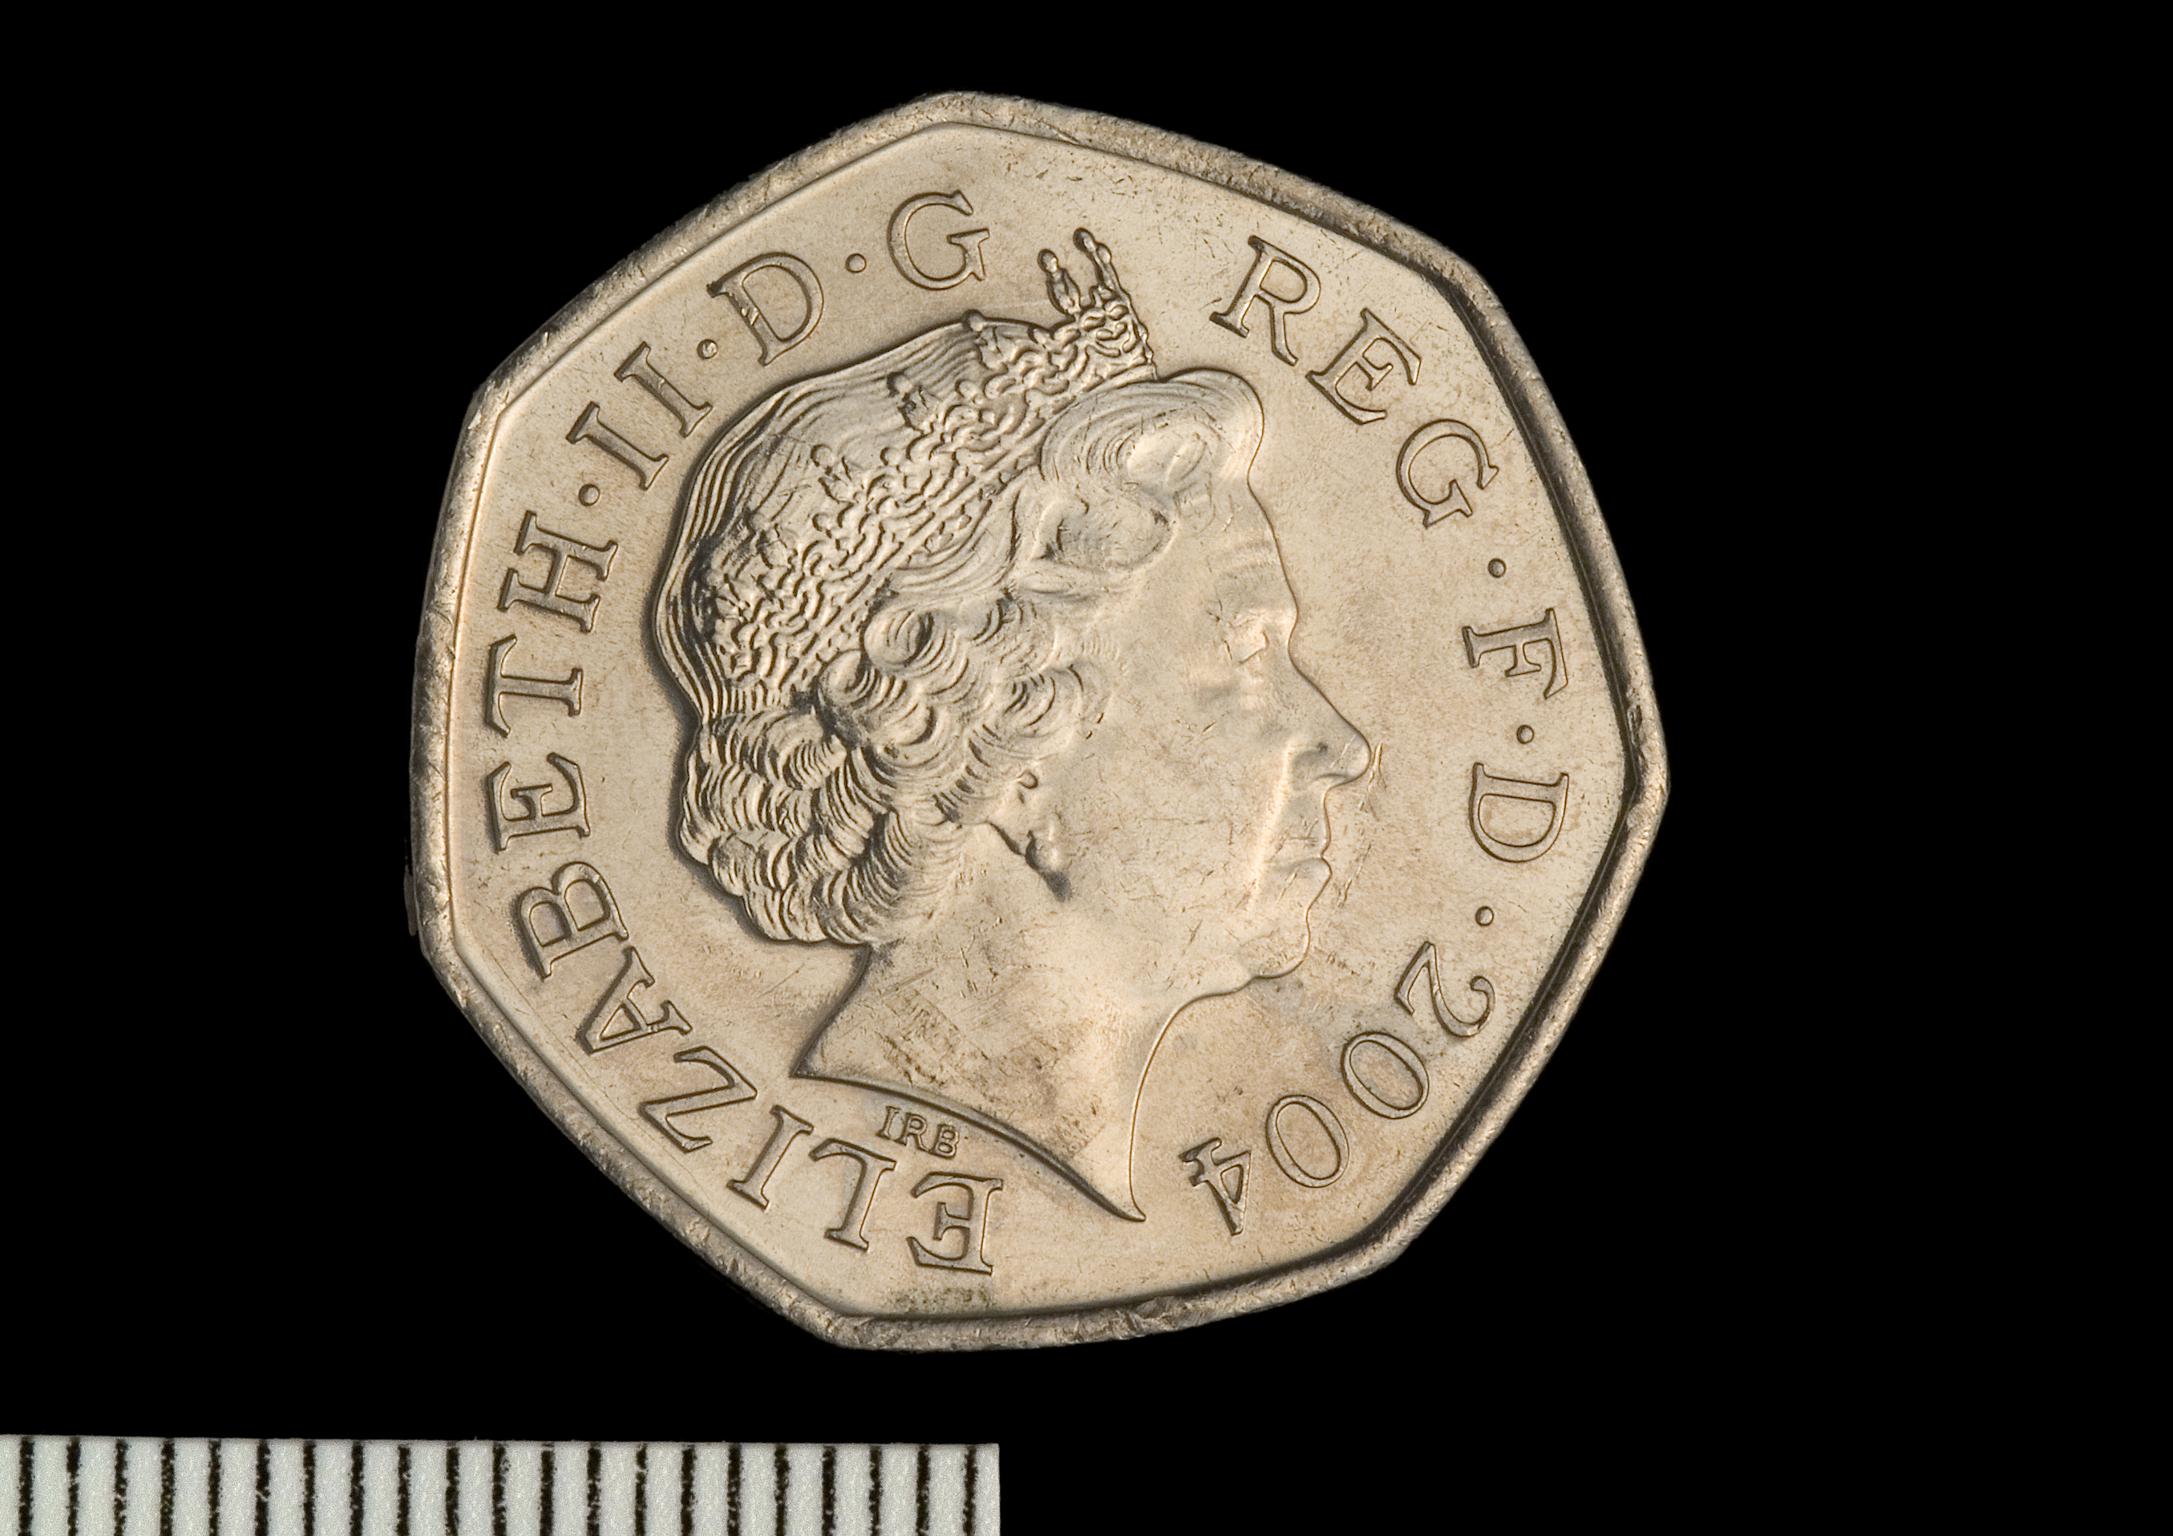 Elizabeth II fifty pence (commemorative)